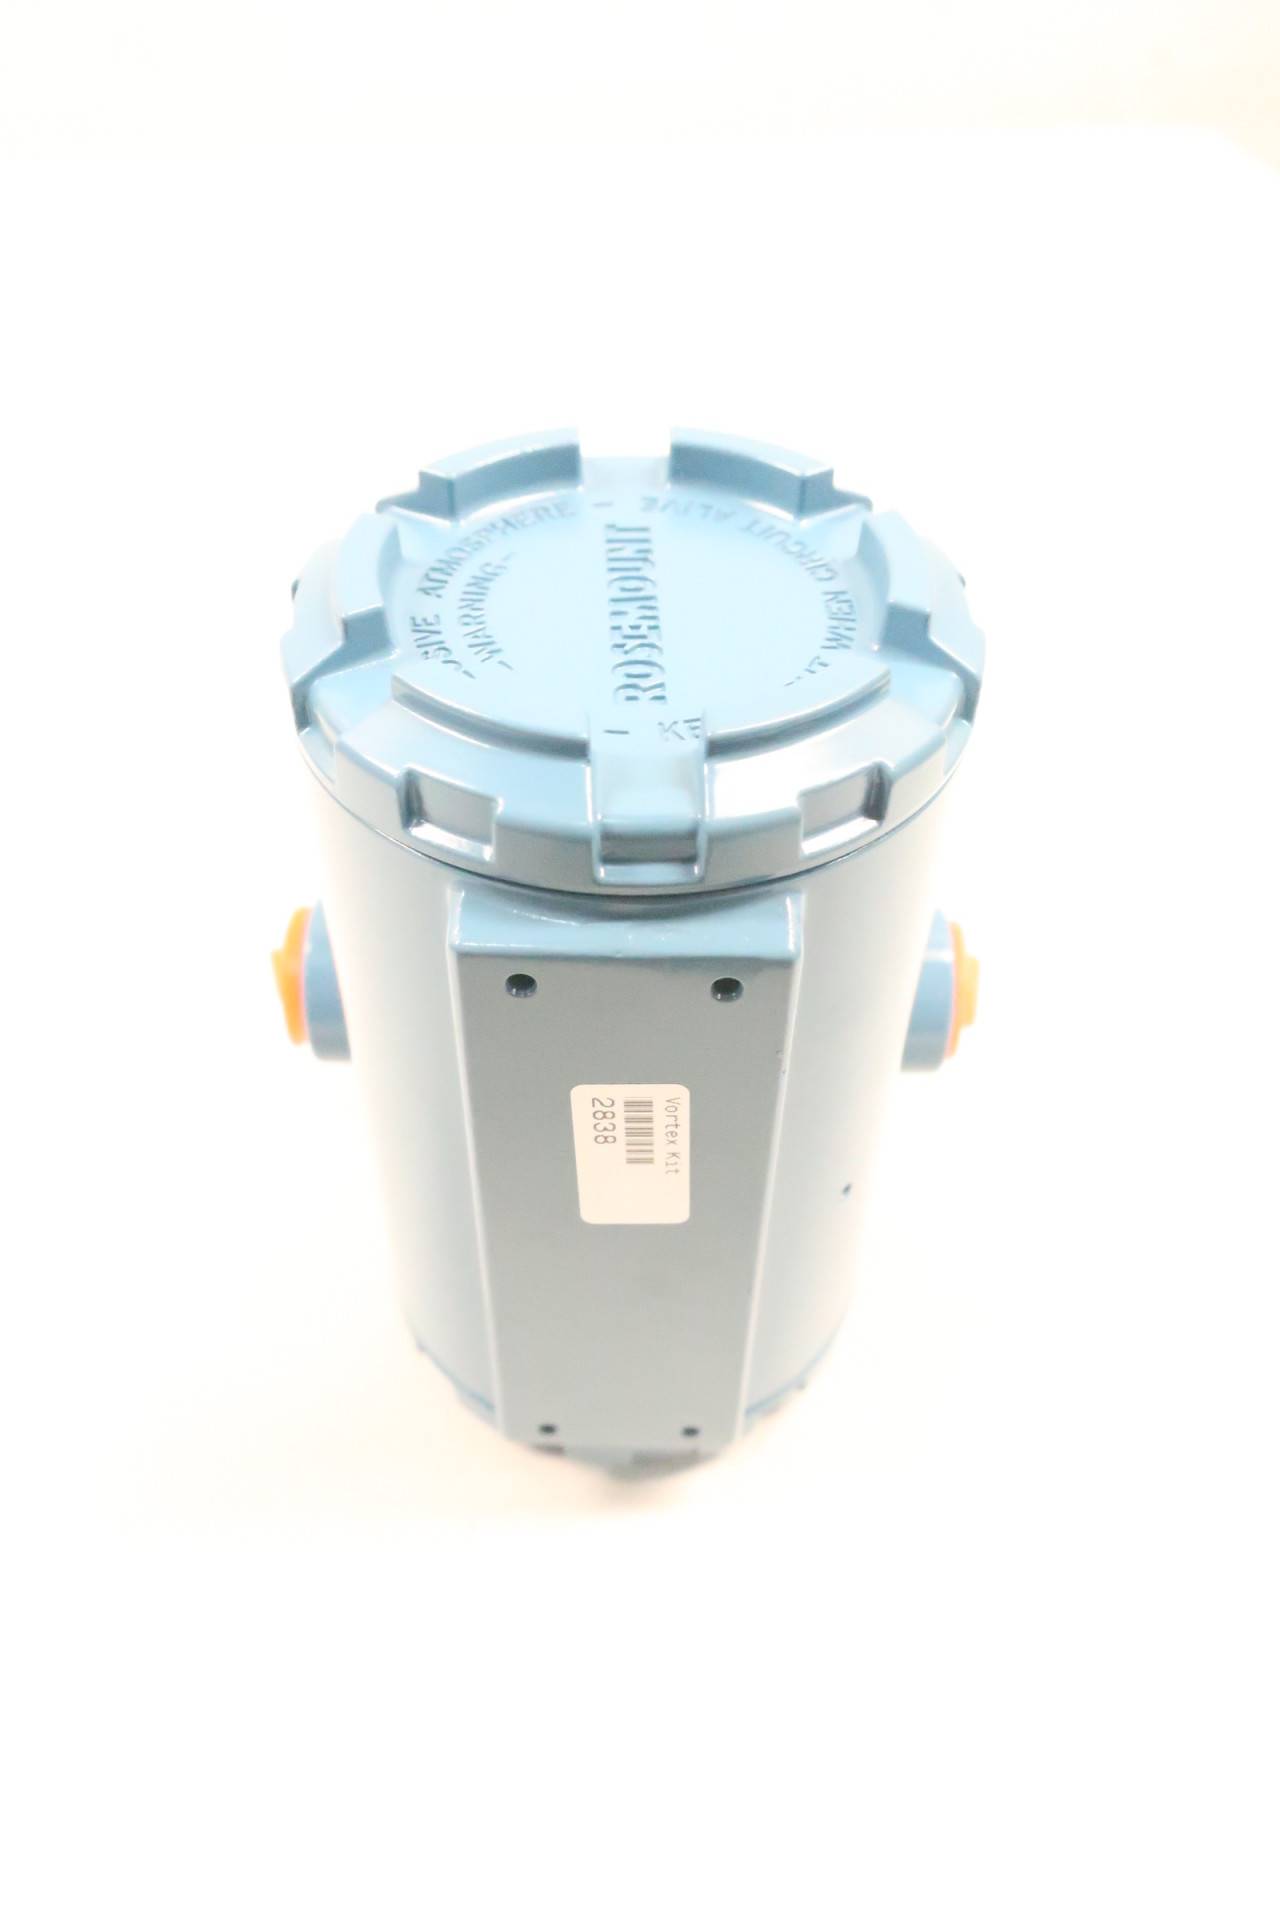 Rosemount 08800-5051-3010 2838 Vortex Scr Stm Flow Transmitter Kit